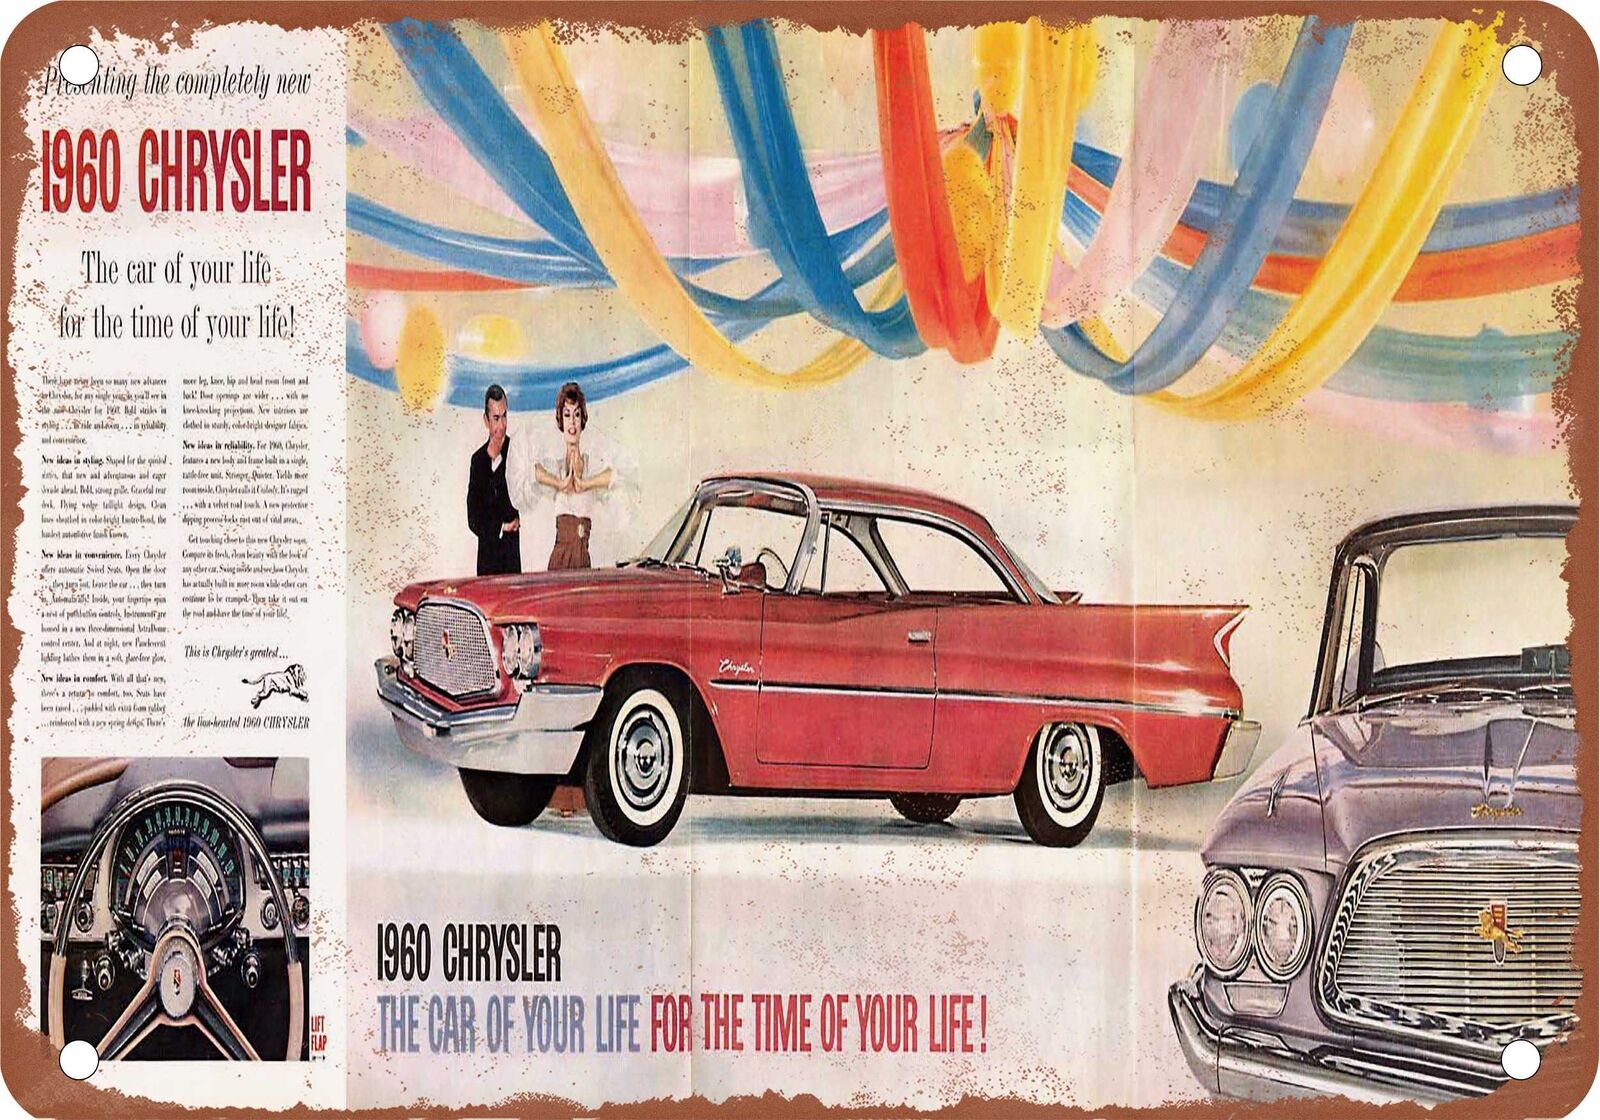 METAL SIGN - 1960 Chrysler Vintage Ad 03 - Old Retro Rusty Look